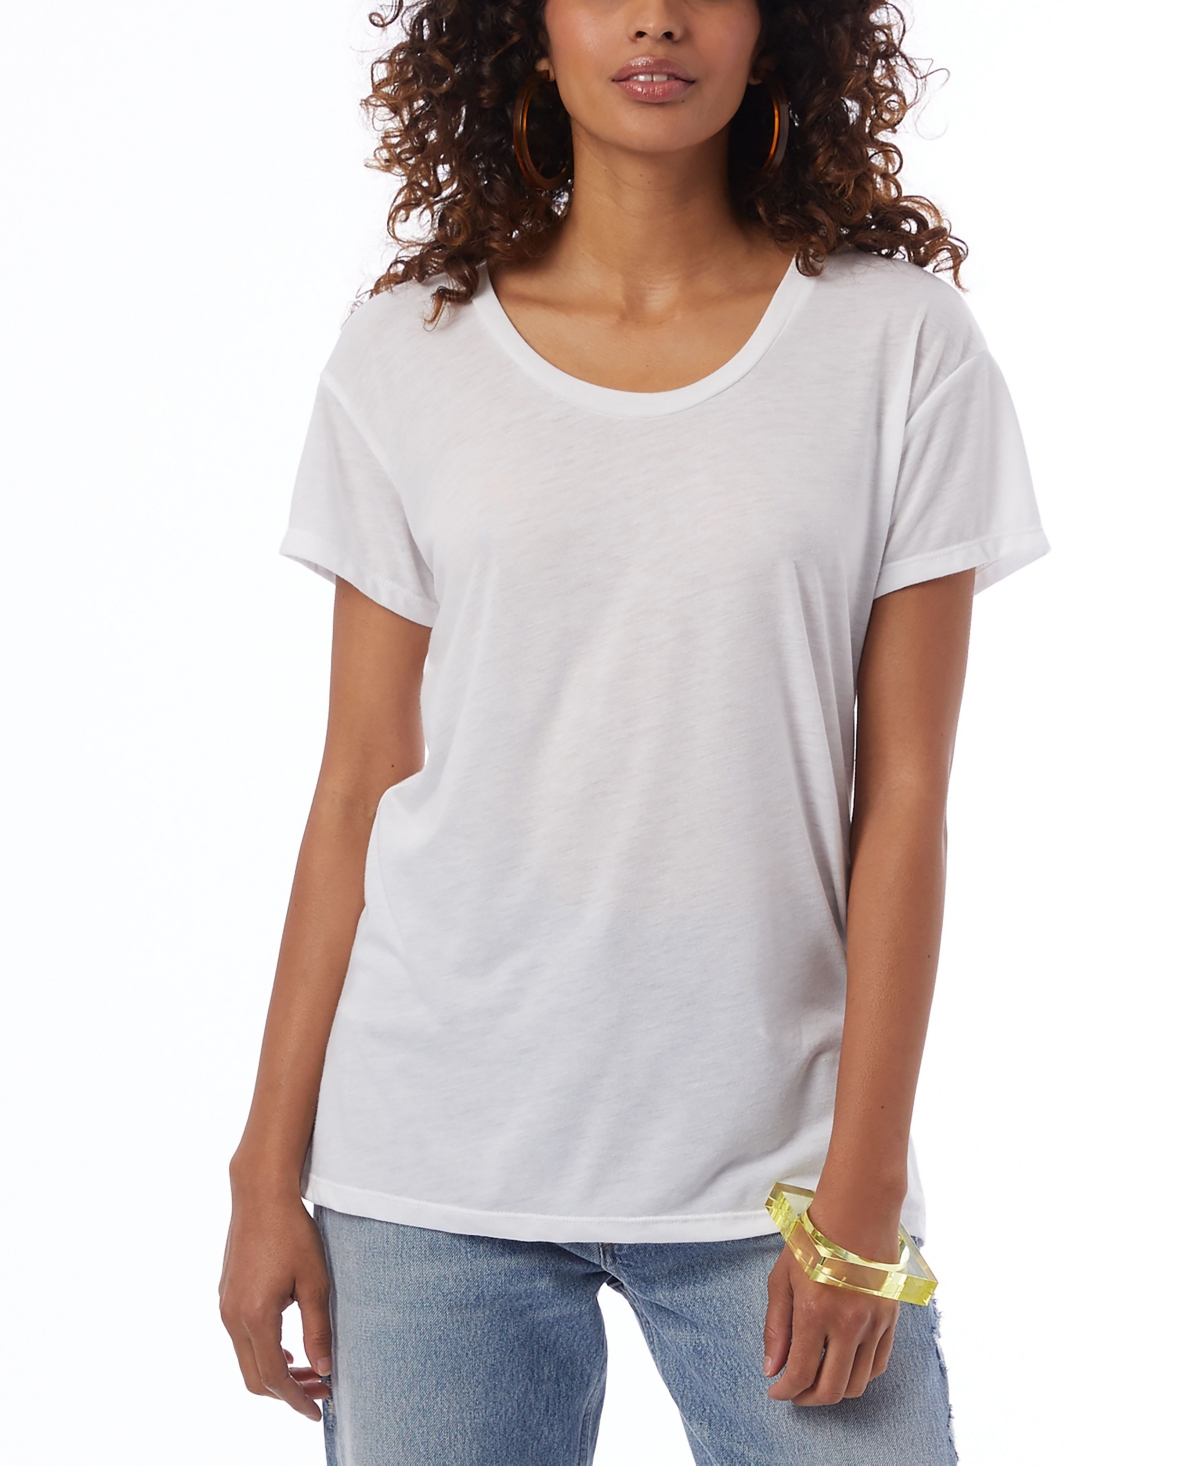 Kimber Slinky Jersey Women's T-shirt - White